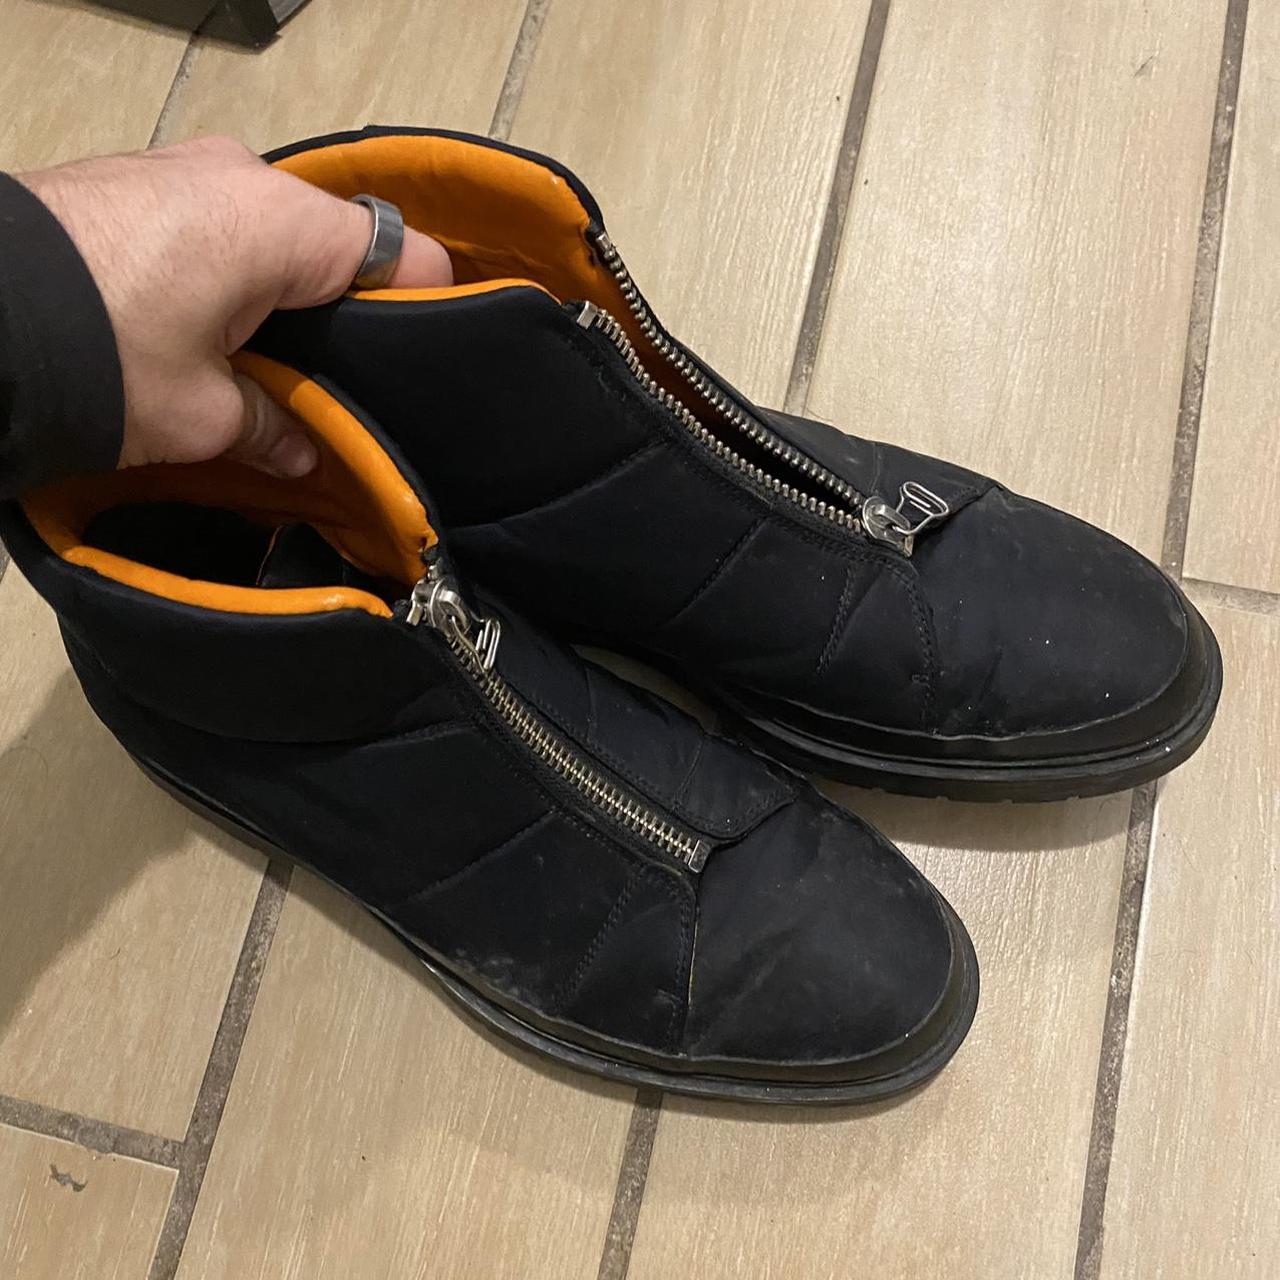 Alexander Wang Men's Black and Orange Boots (3)